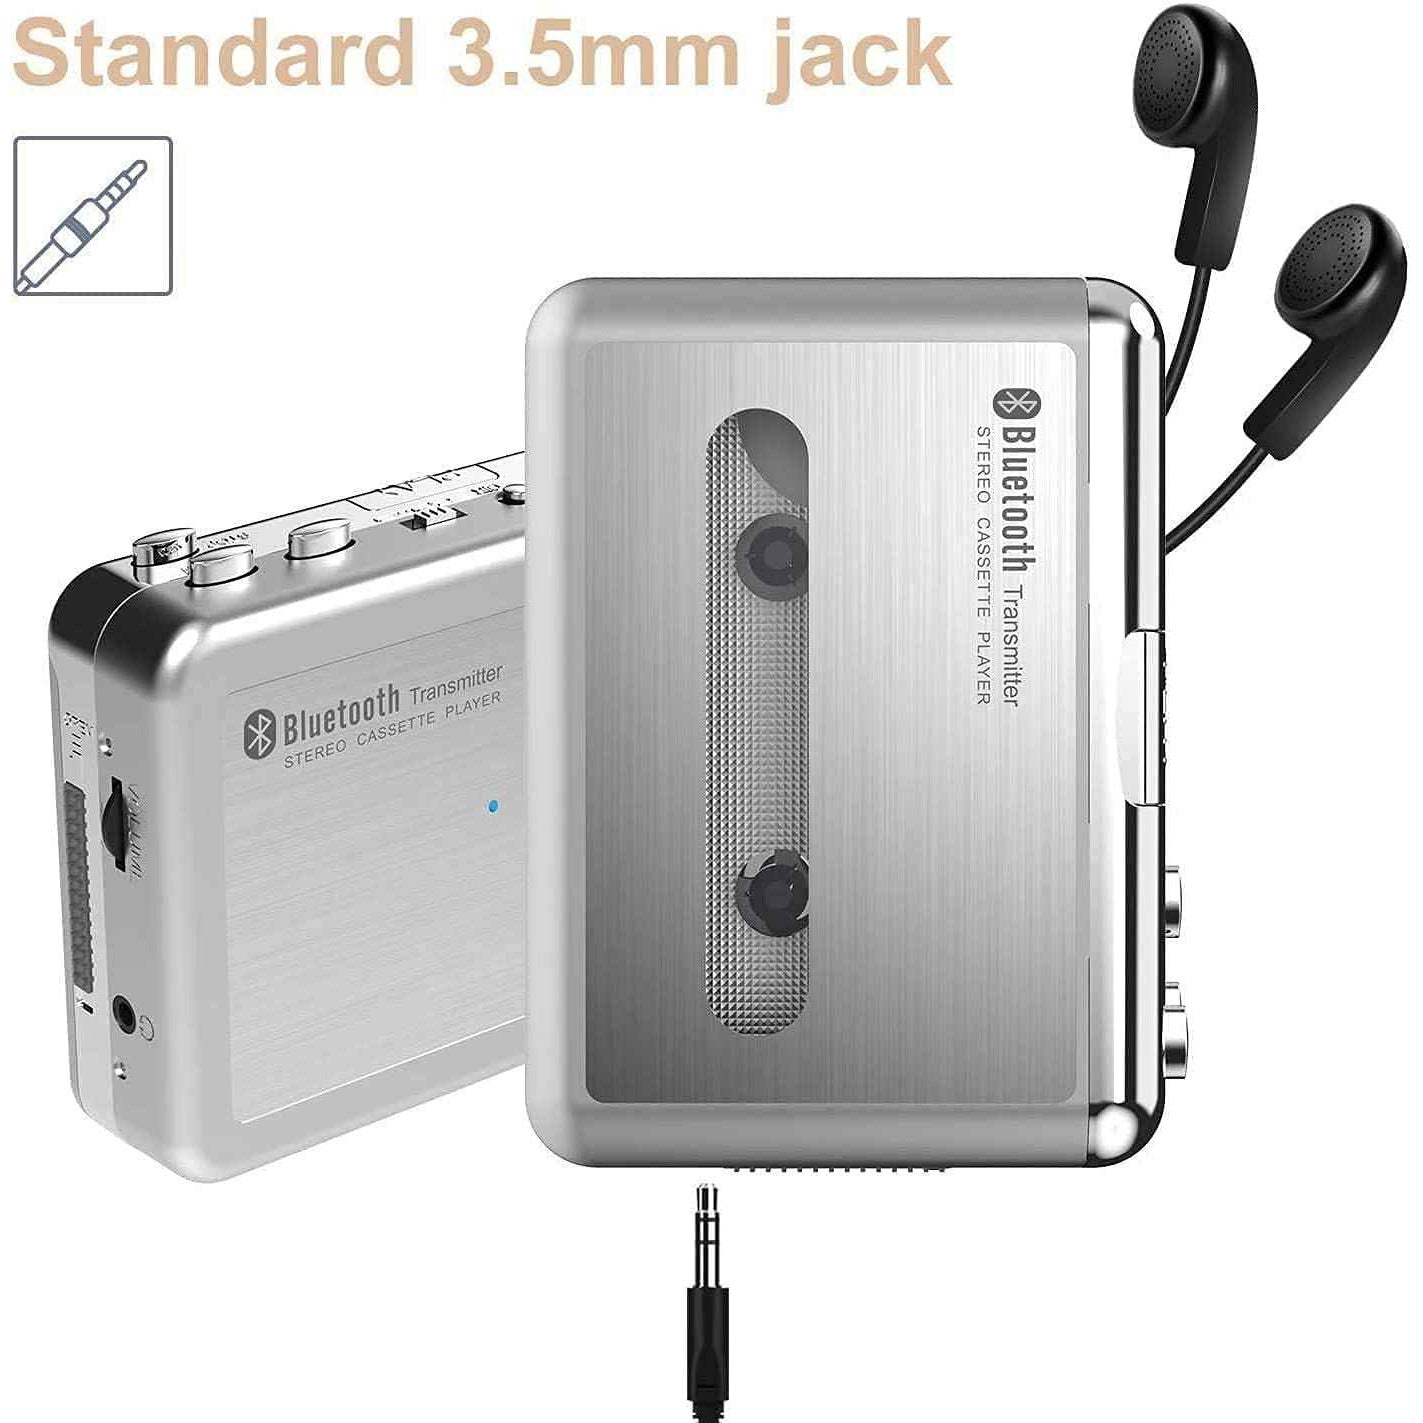 Cassette Player Bluetooth Transfer to Headphone/Speaker